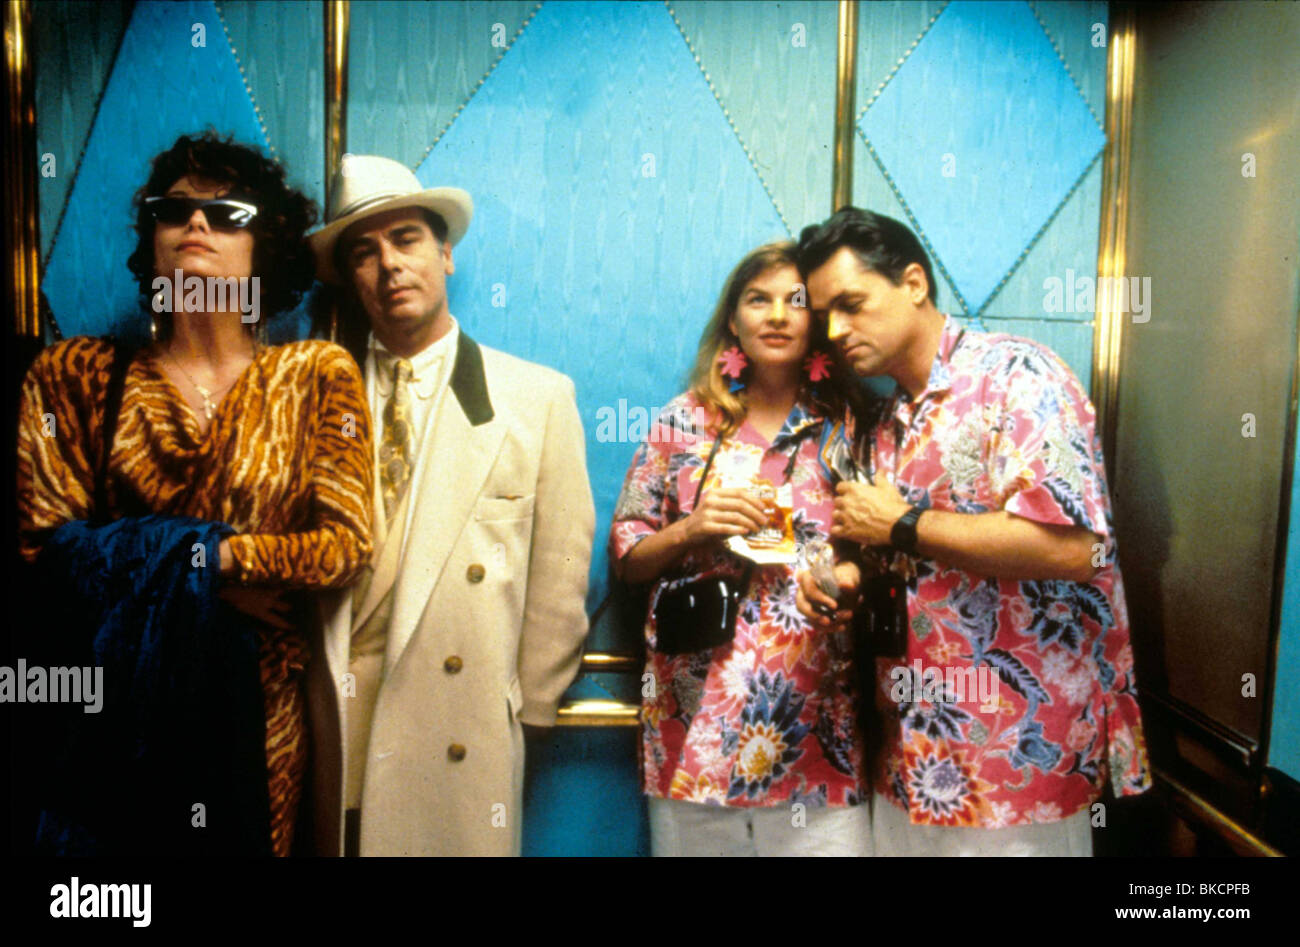 JONATHAN DEMME (DIR) de E/S de la mafia "casados" con Michelle Pfeiffer, Dean STOCKWELL DEME 005 Foto de stock